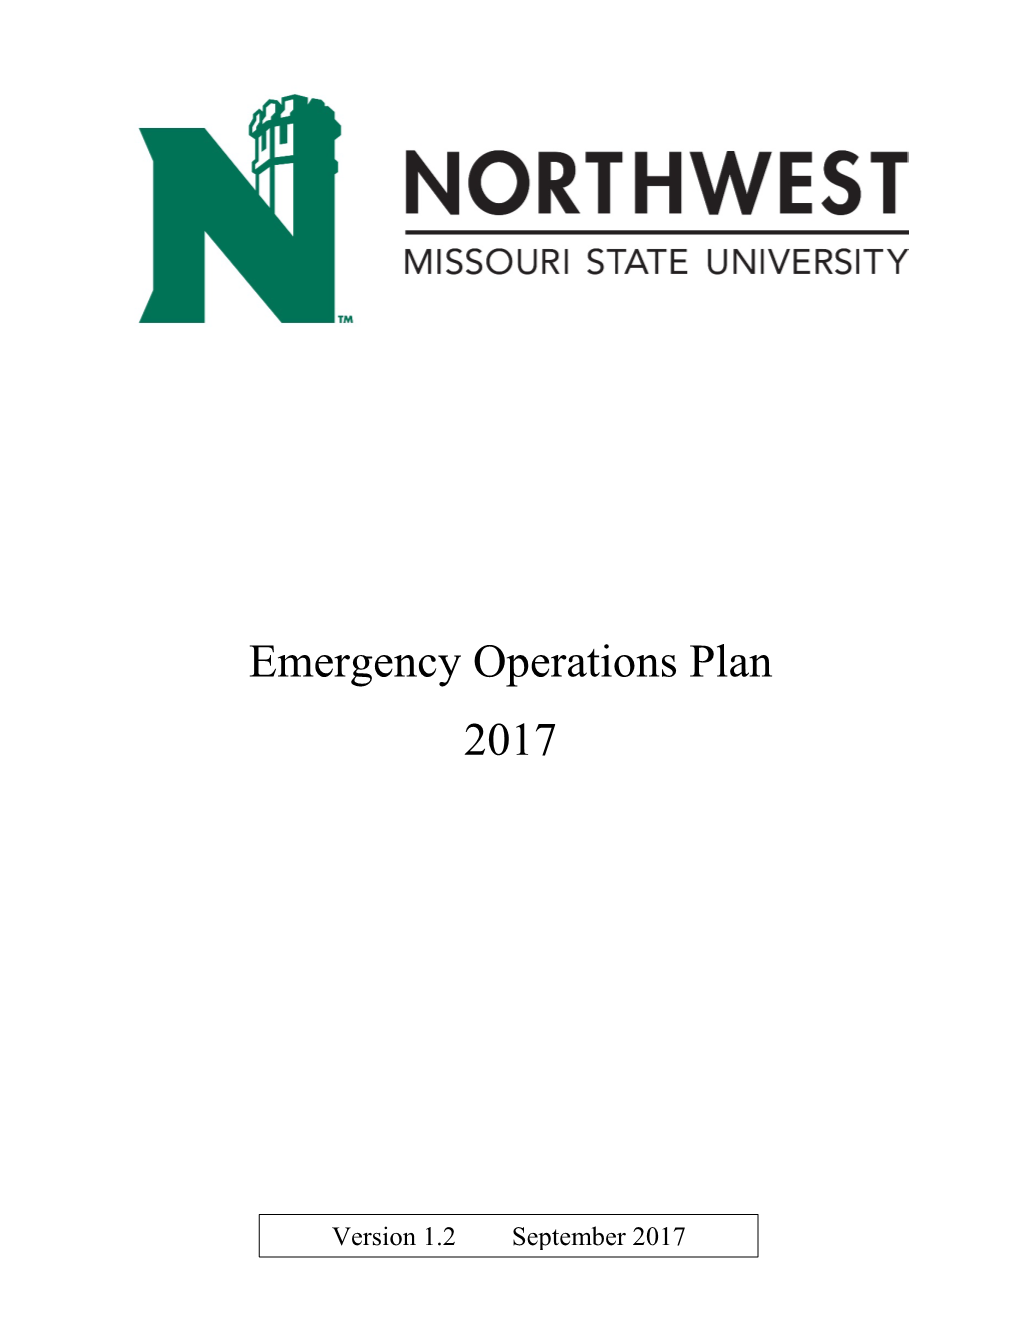 Emergency Operations Plan 2017